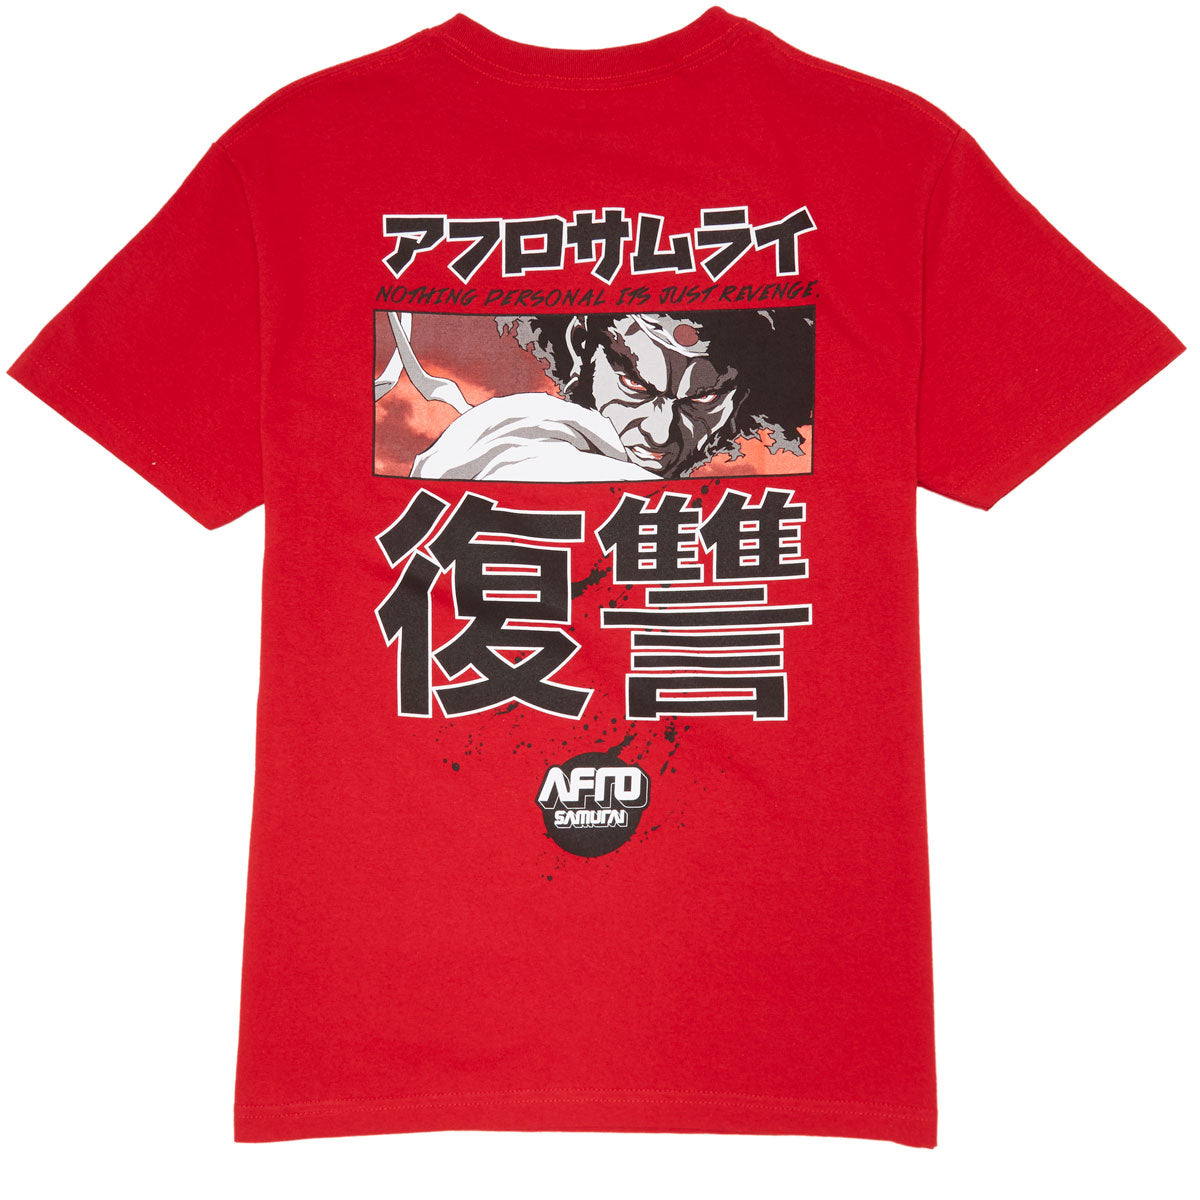 DGK x Afro Samurai Afro T-Shirt - Red image 1